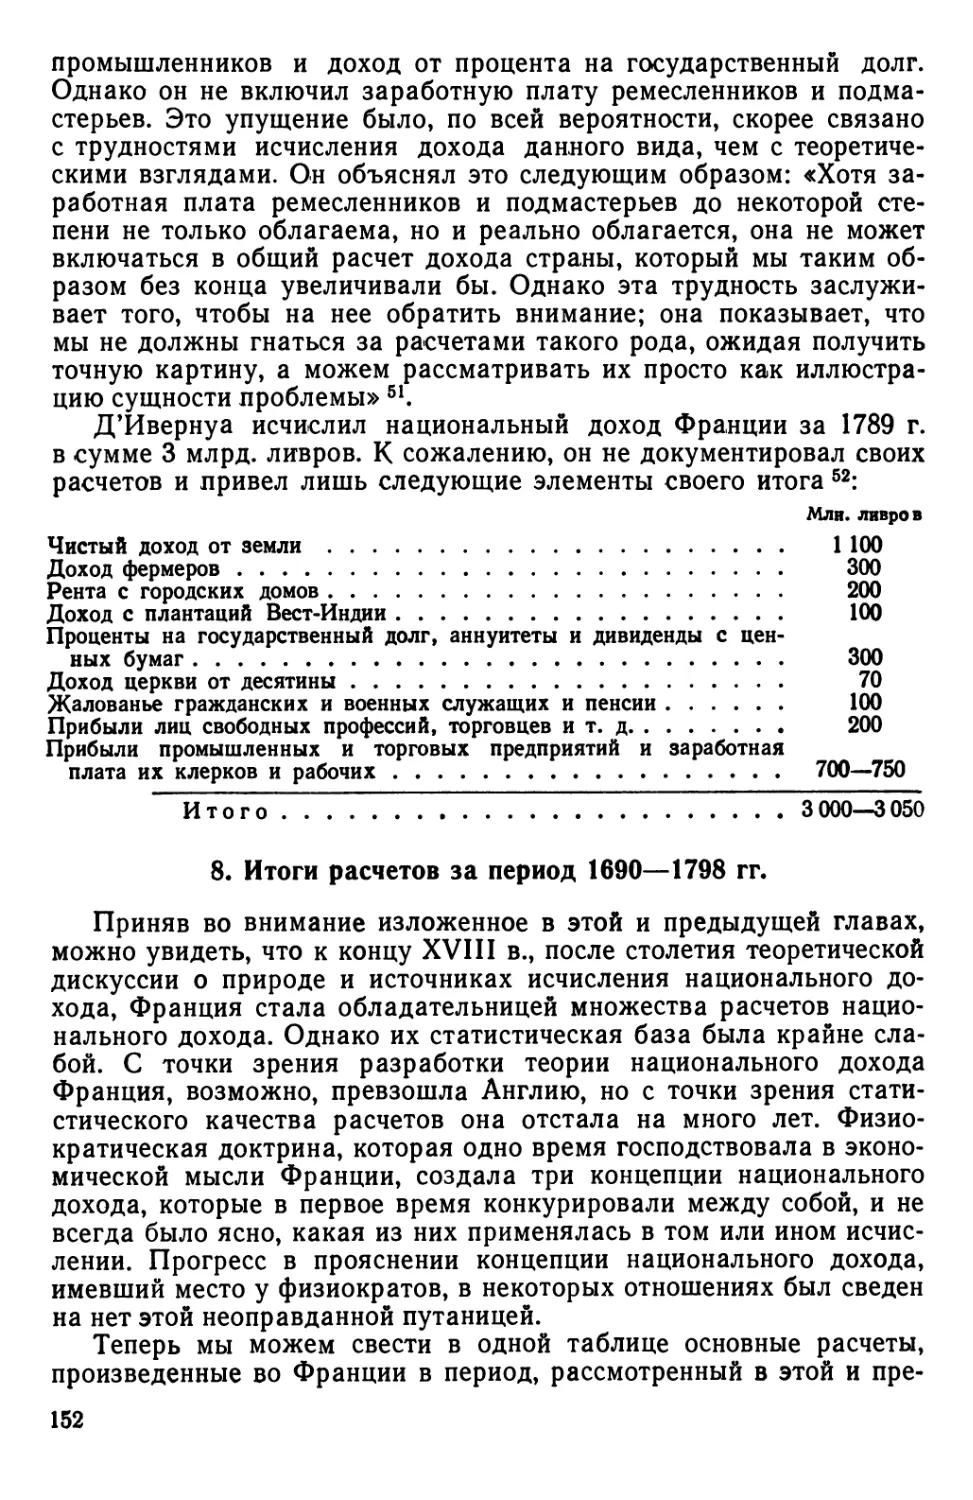 8. Итоги расчетов за период 1690—1798 гг